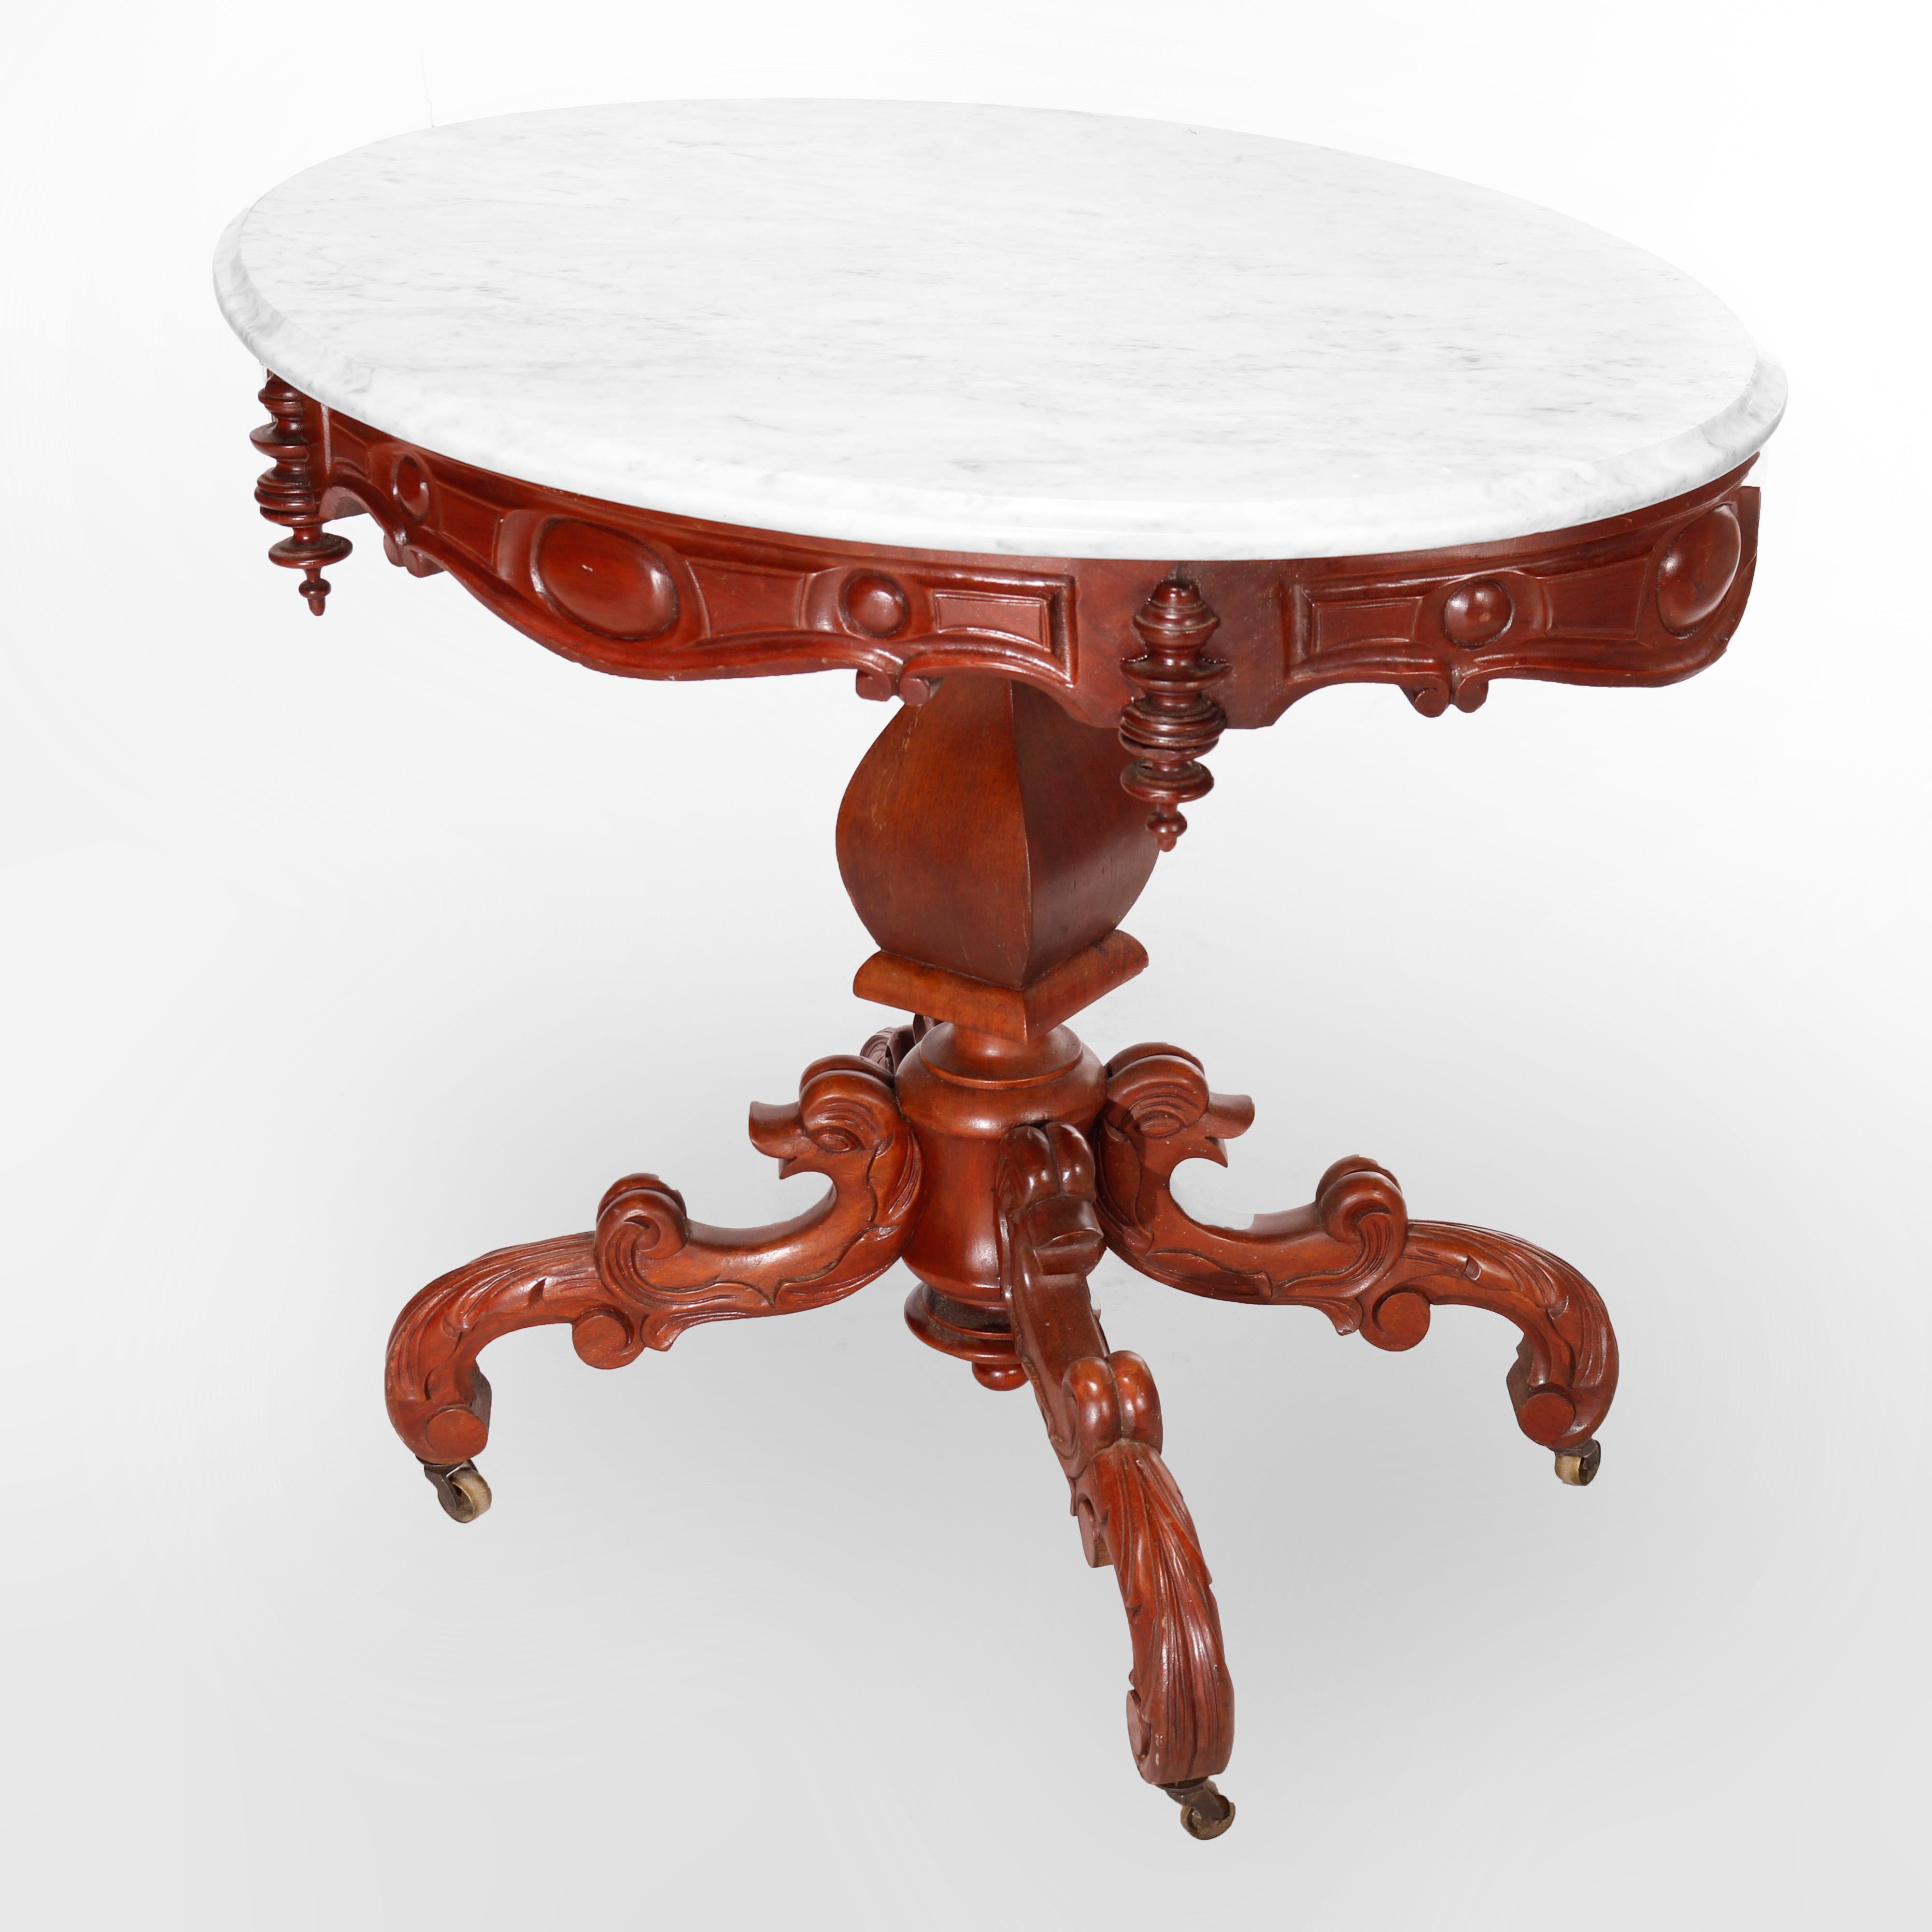 Antique Renaissance Revival Figural Carved Oval Marble Top Parlor Table, c1880 For Sale 1